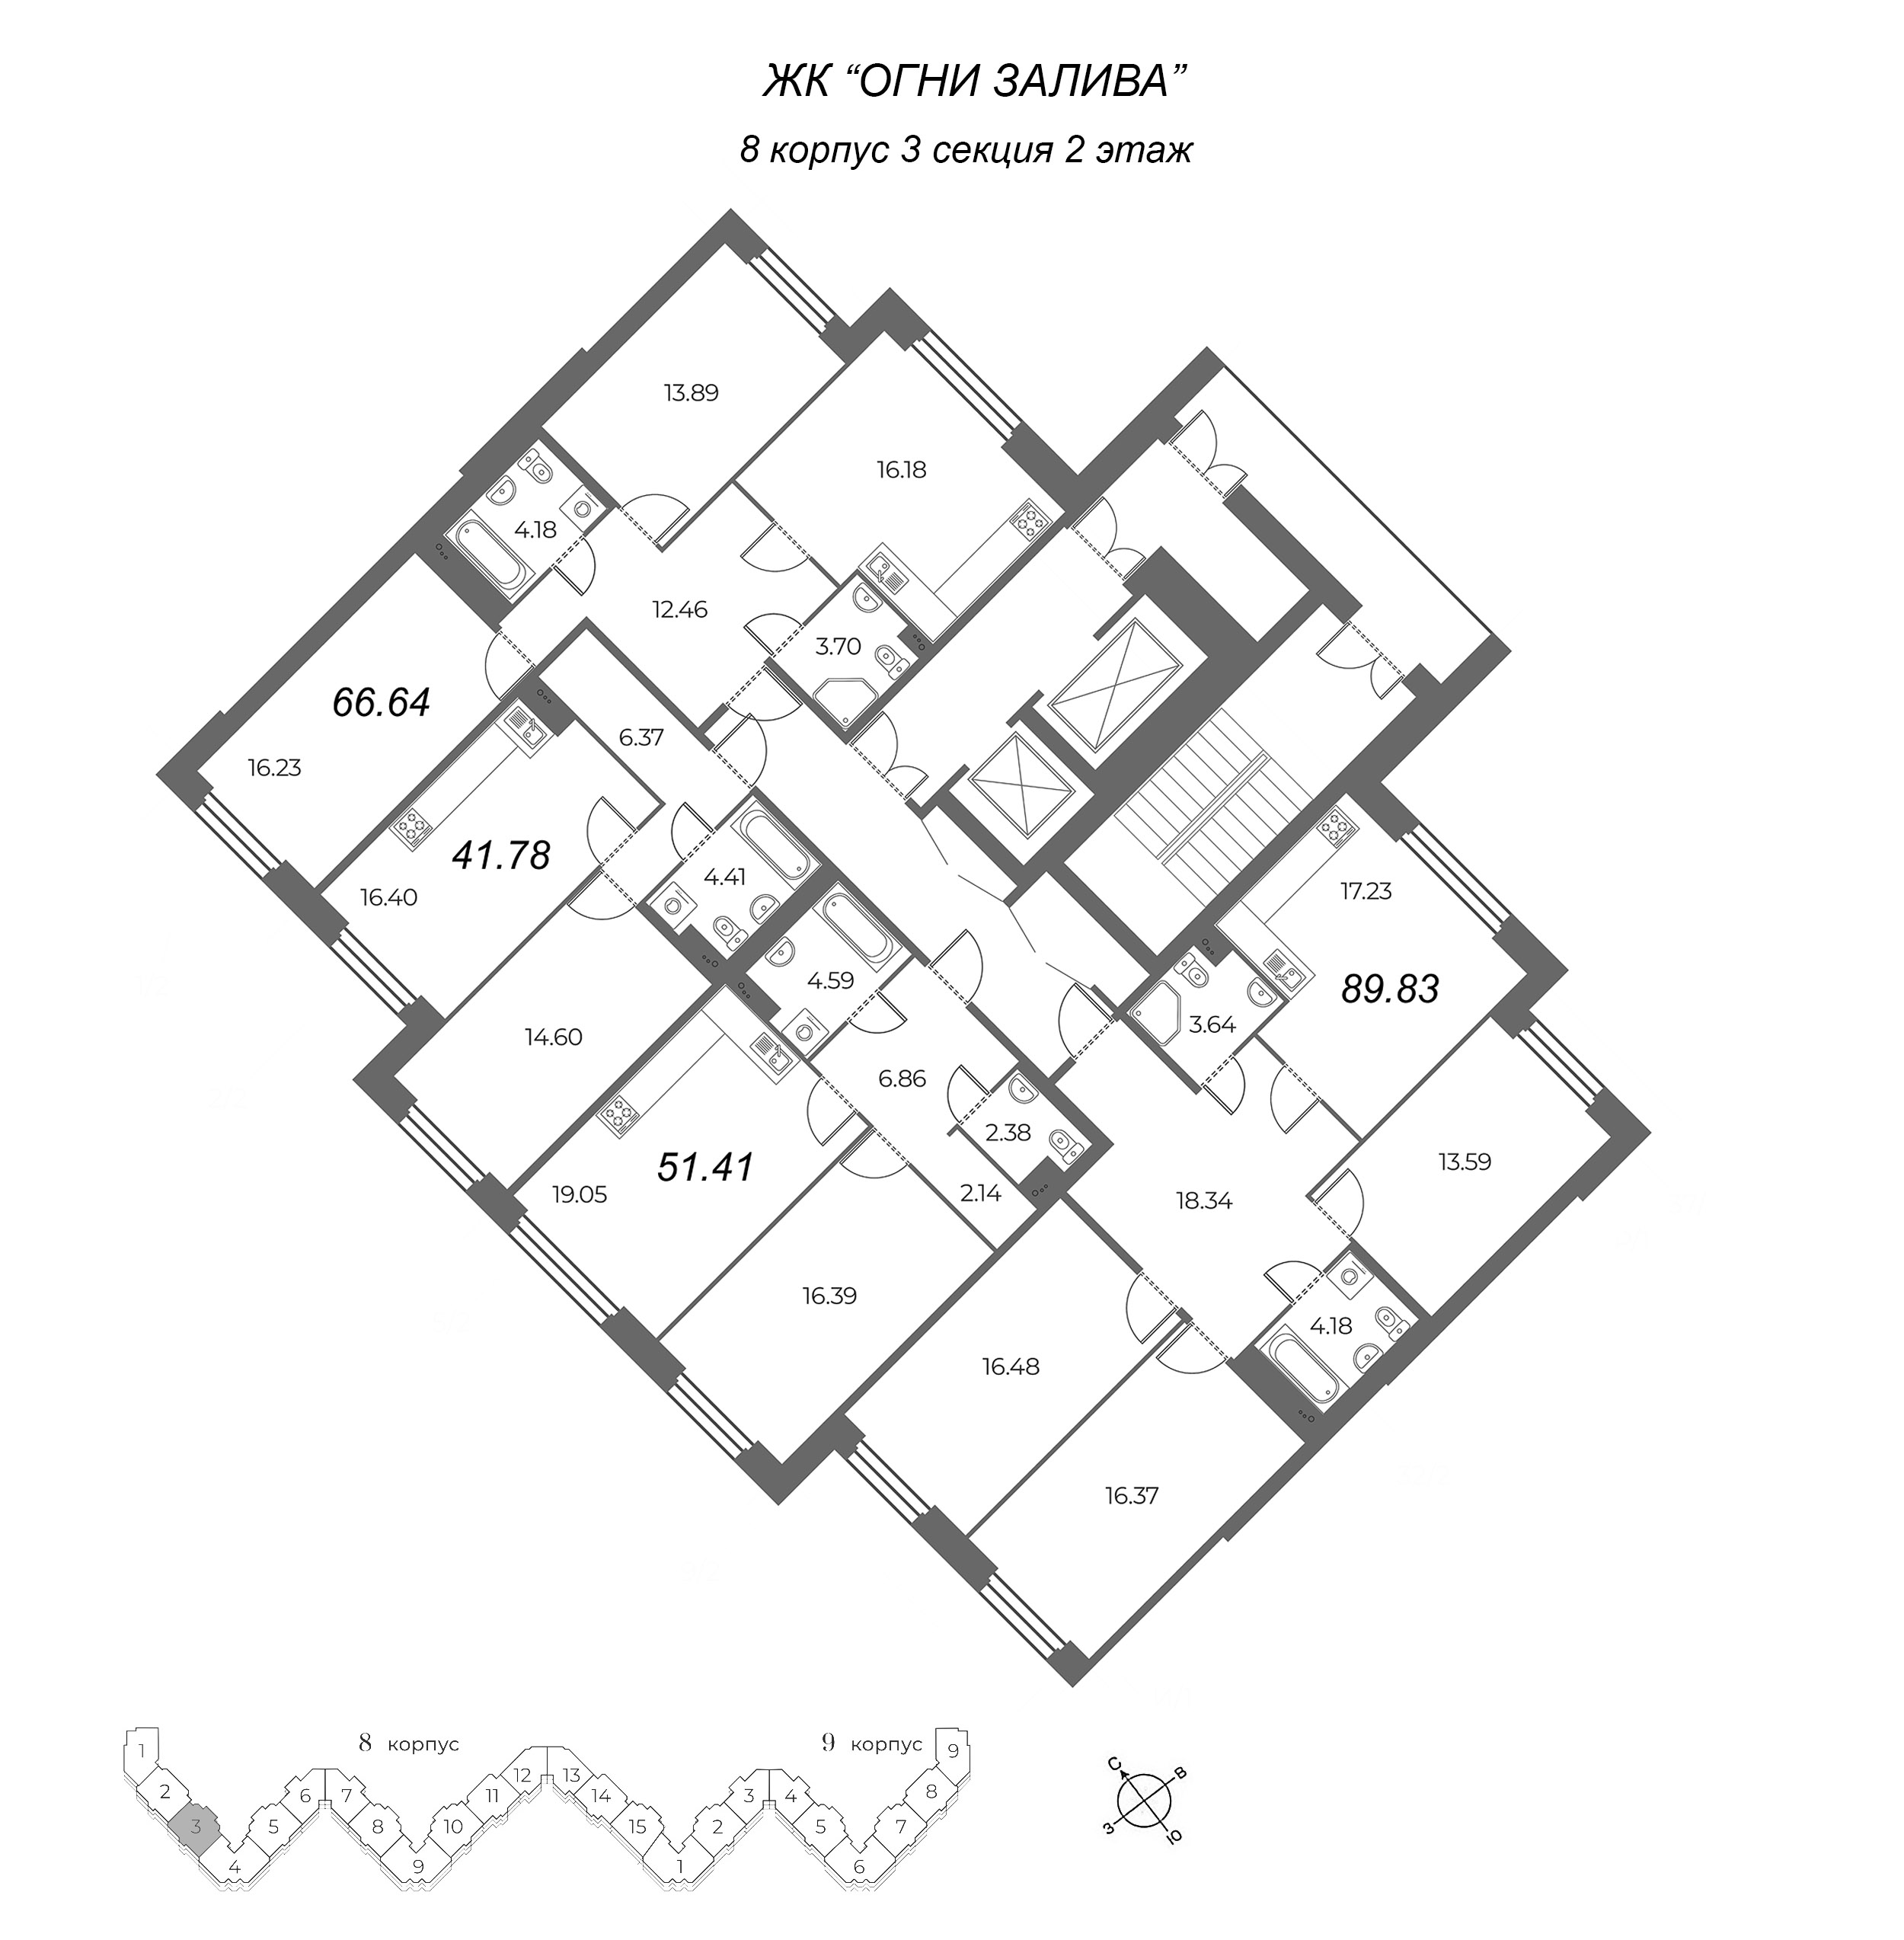 2-комнатная (Евро) квартира, 51.41 м² - планировка этажа